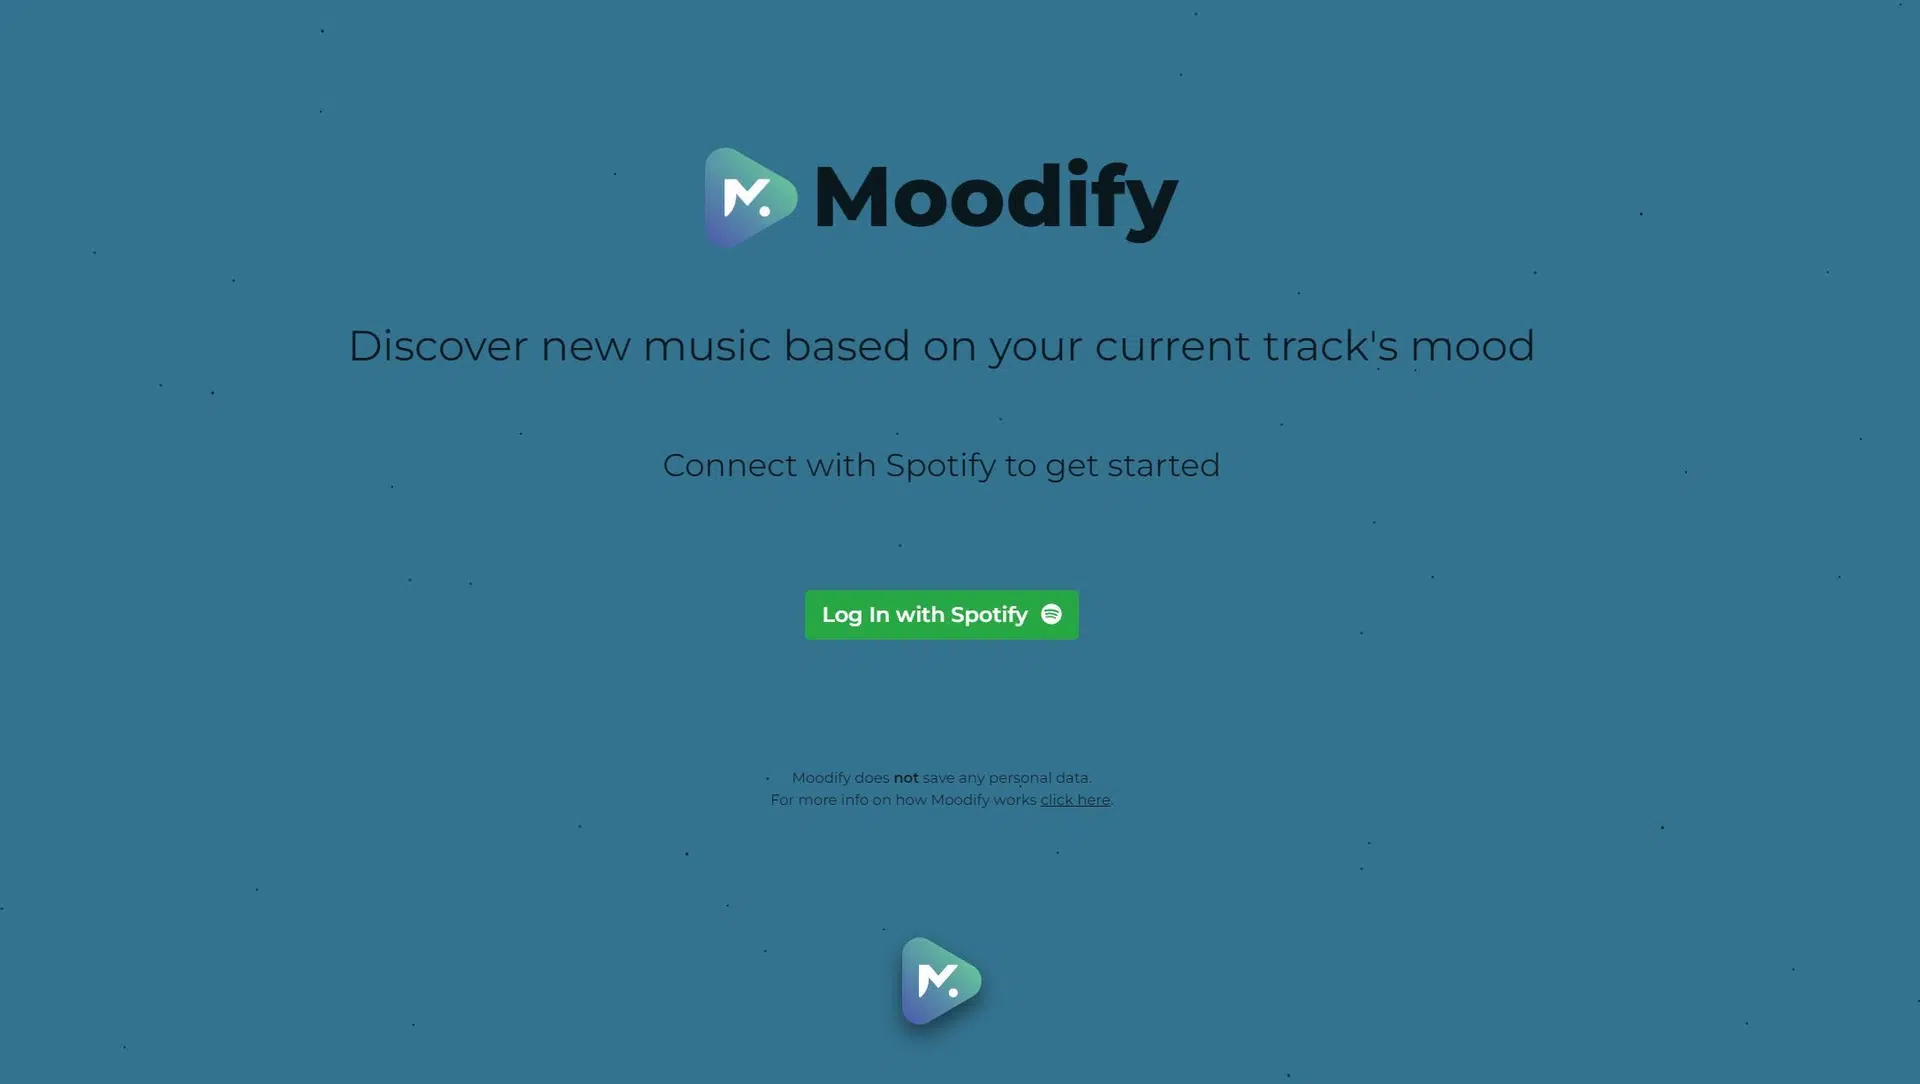 Moodifywebsite picture